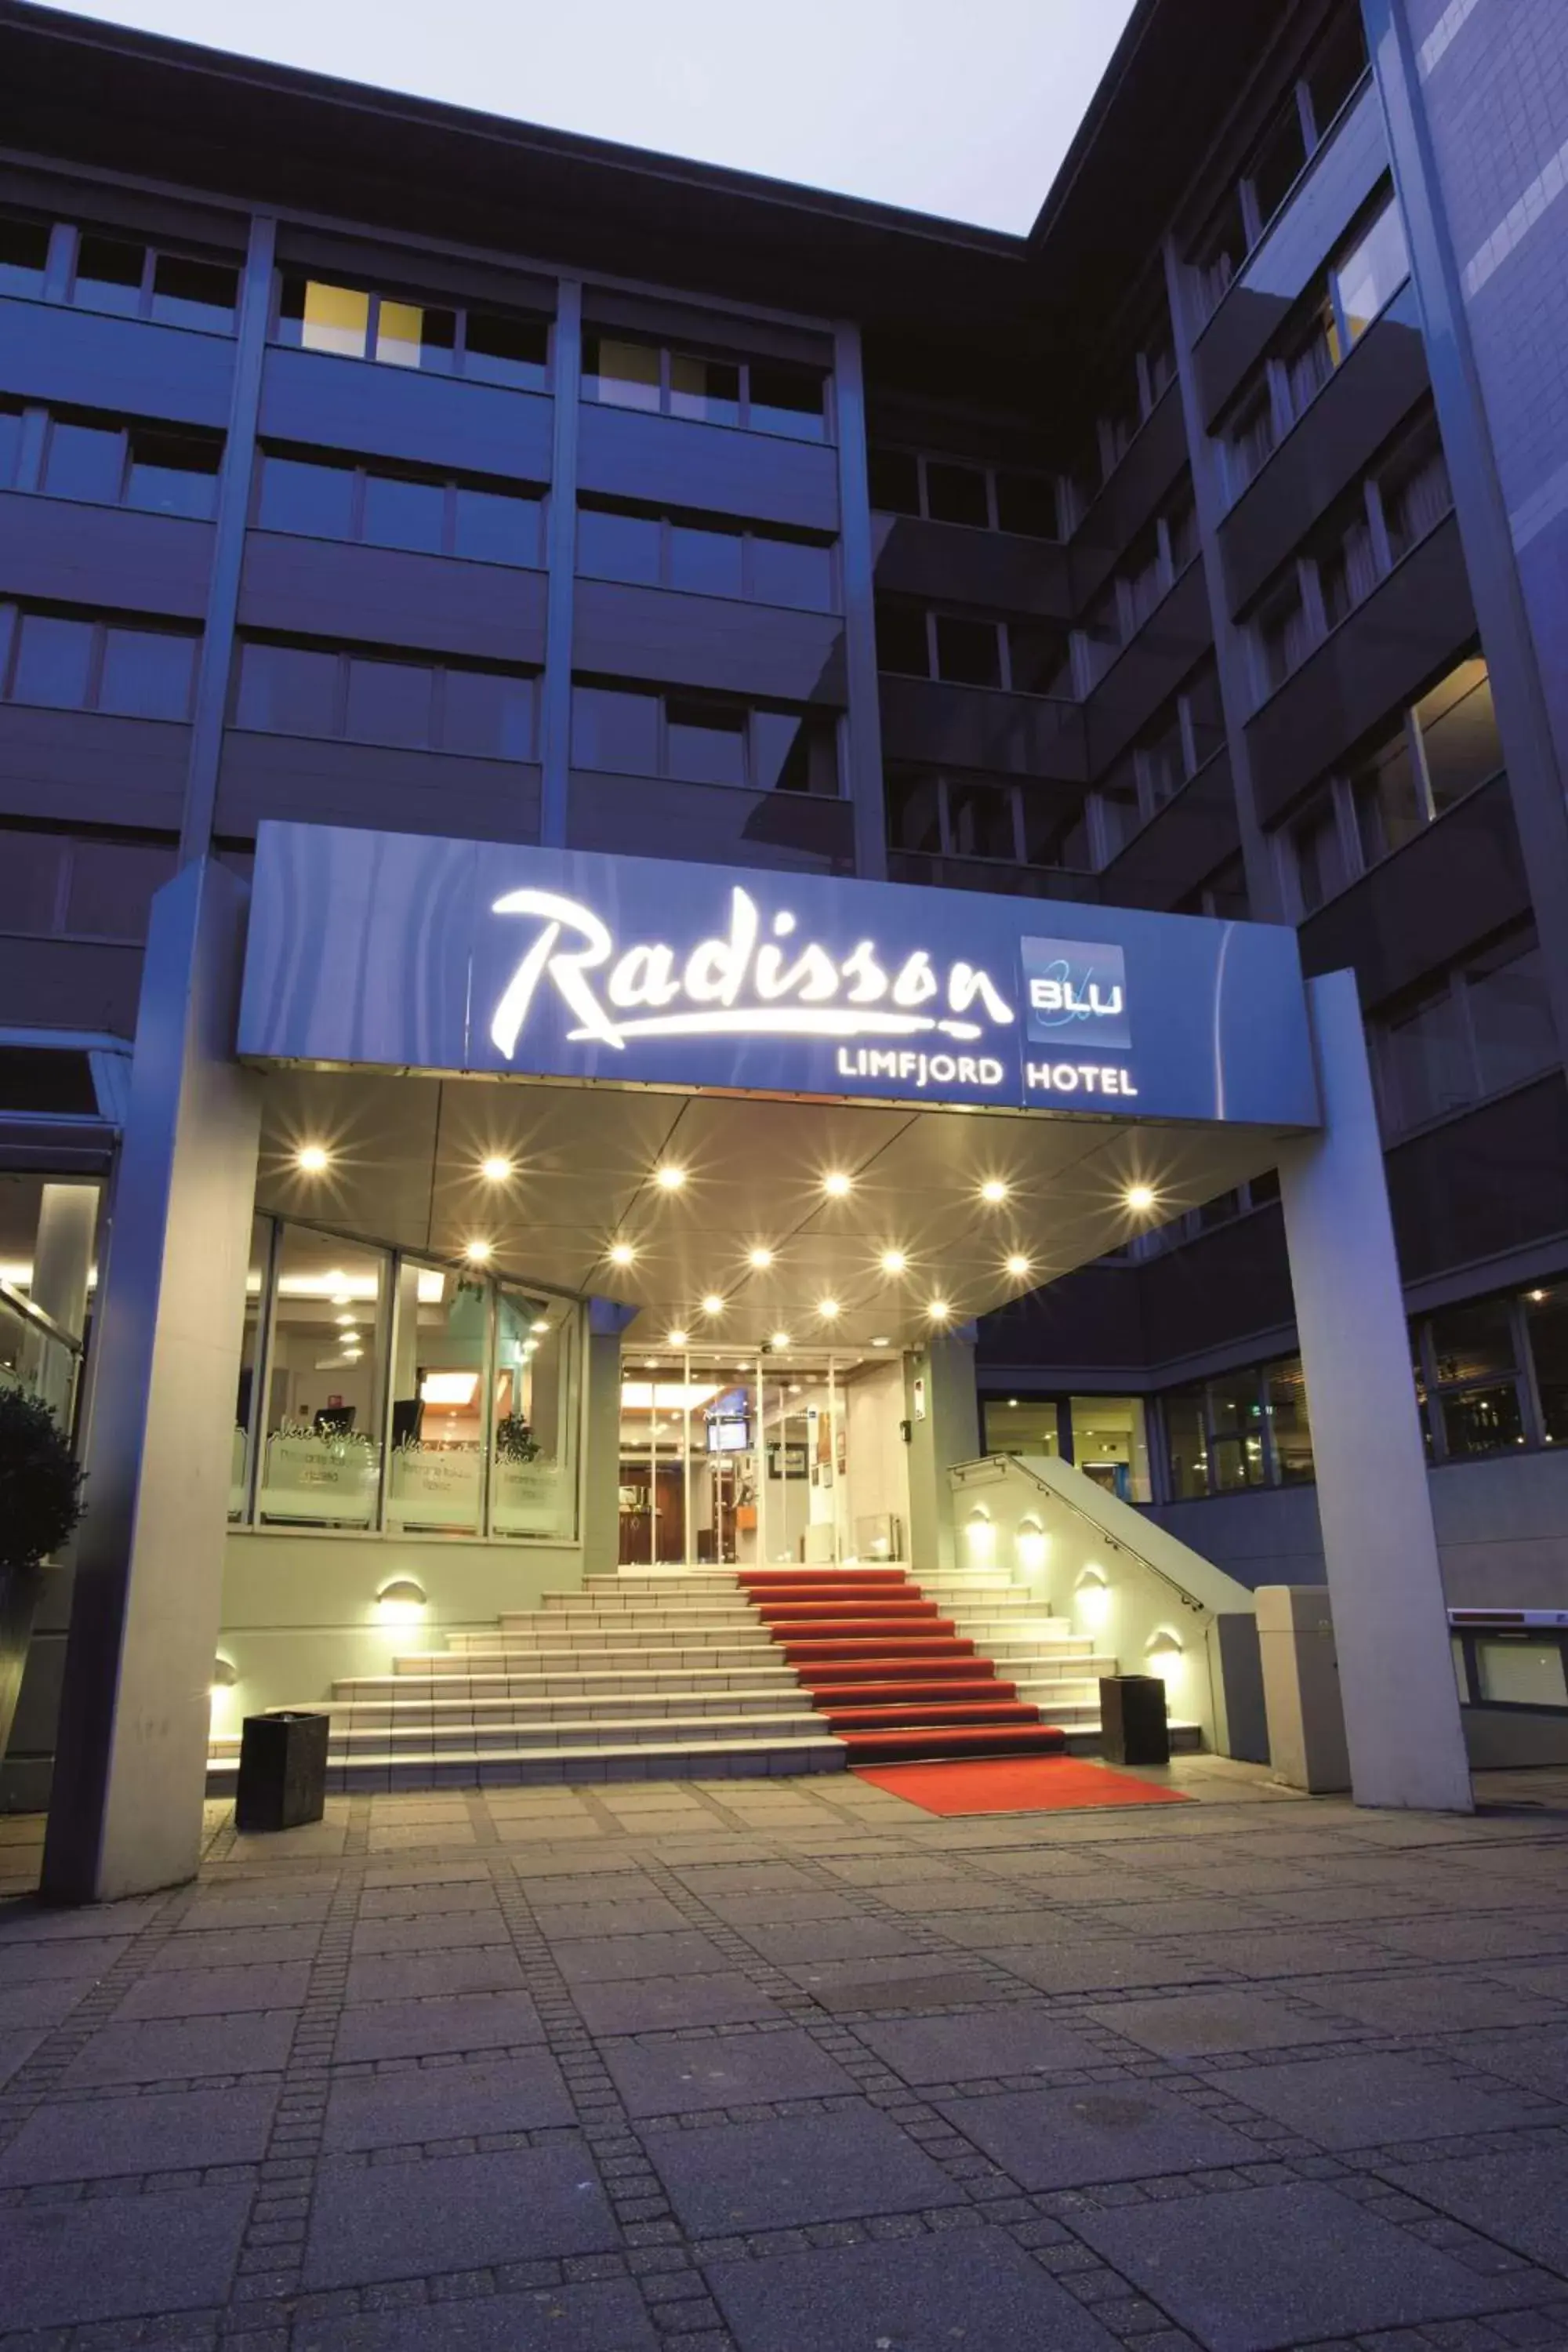 Property building in Radisson Blu Limfjord Hotel, Aalborg